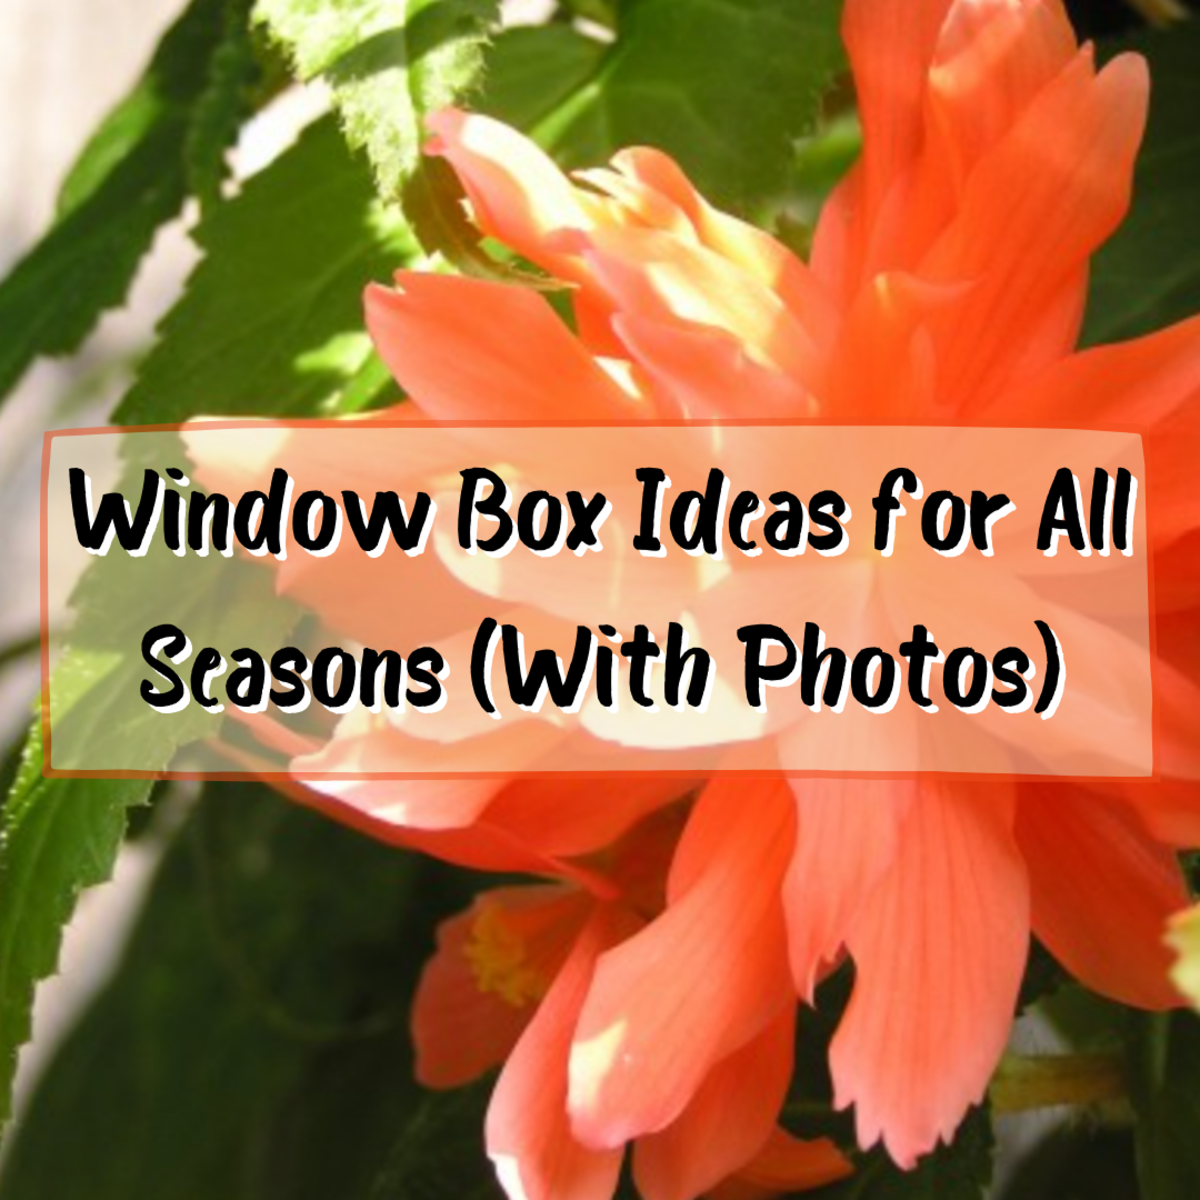 Window Box Ideas for All Seasons (With Photos)